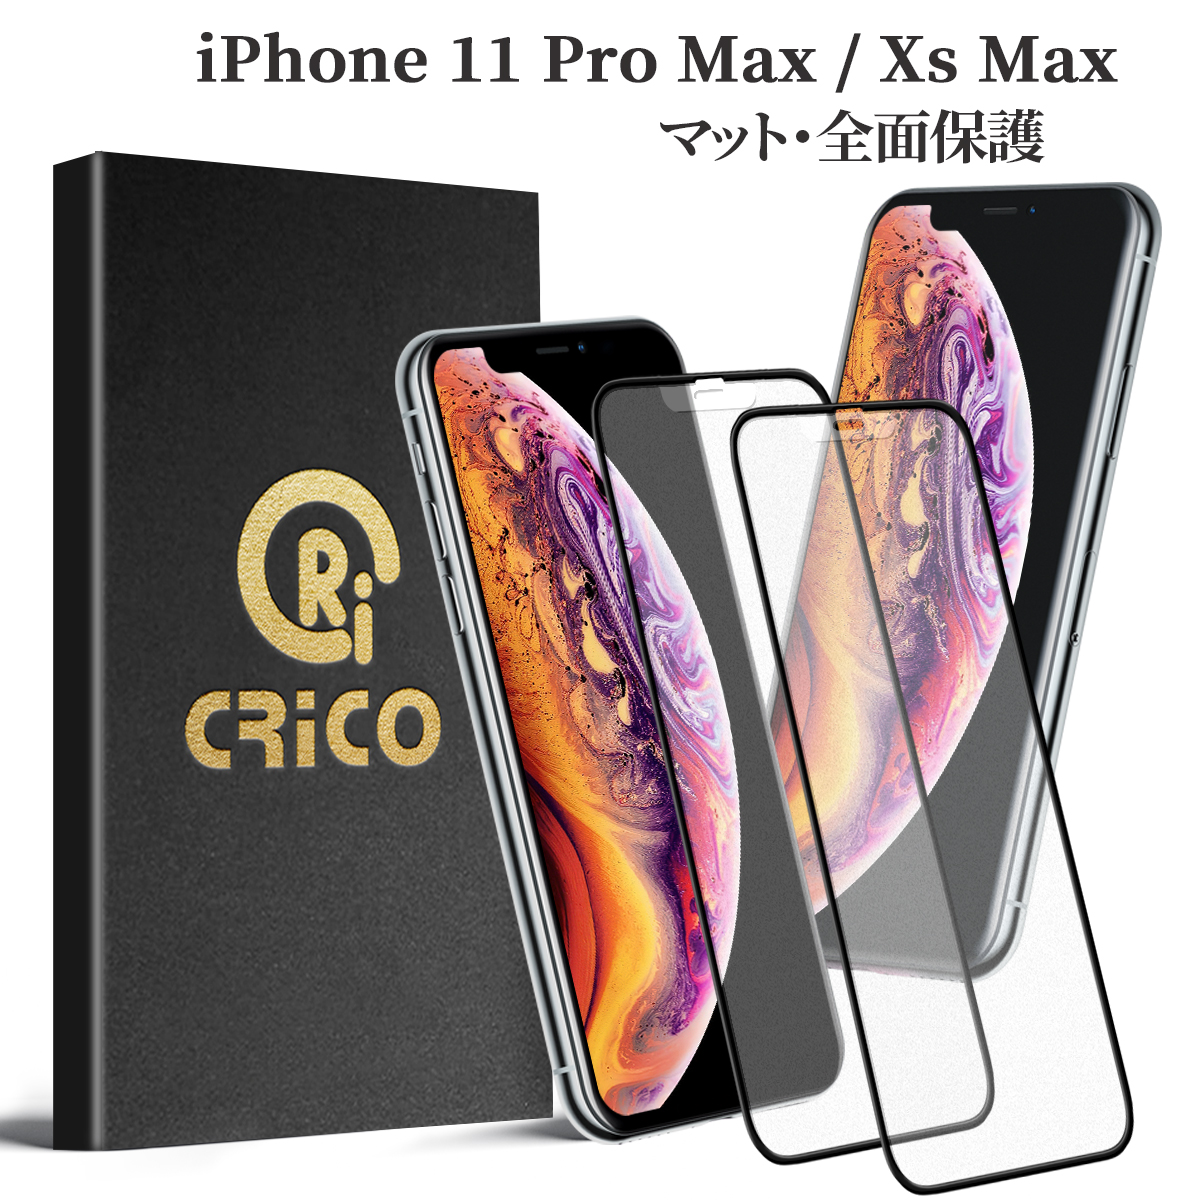 iPhone 11 Pro Max iPhone Xs Max 保護フィルム ガラスフィルム